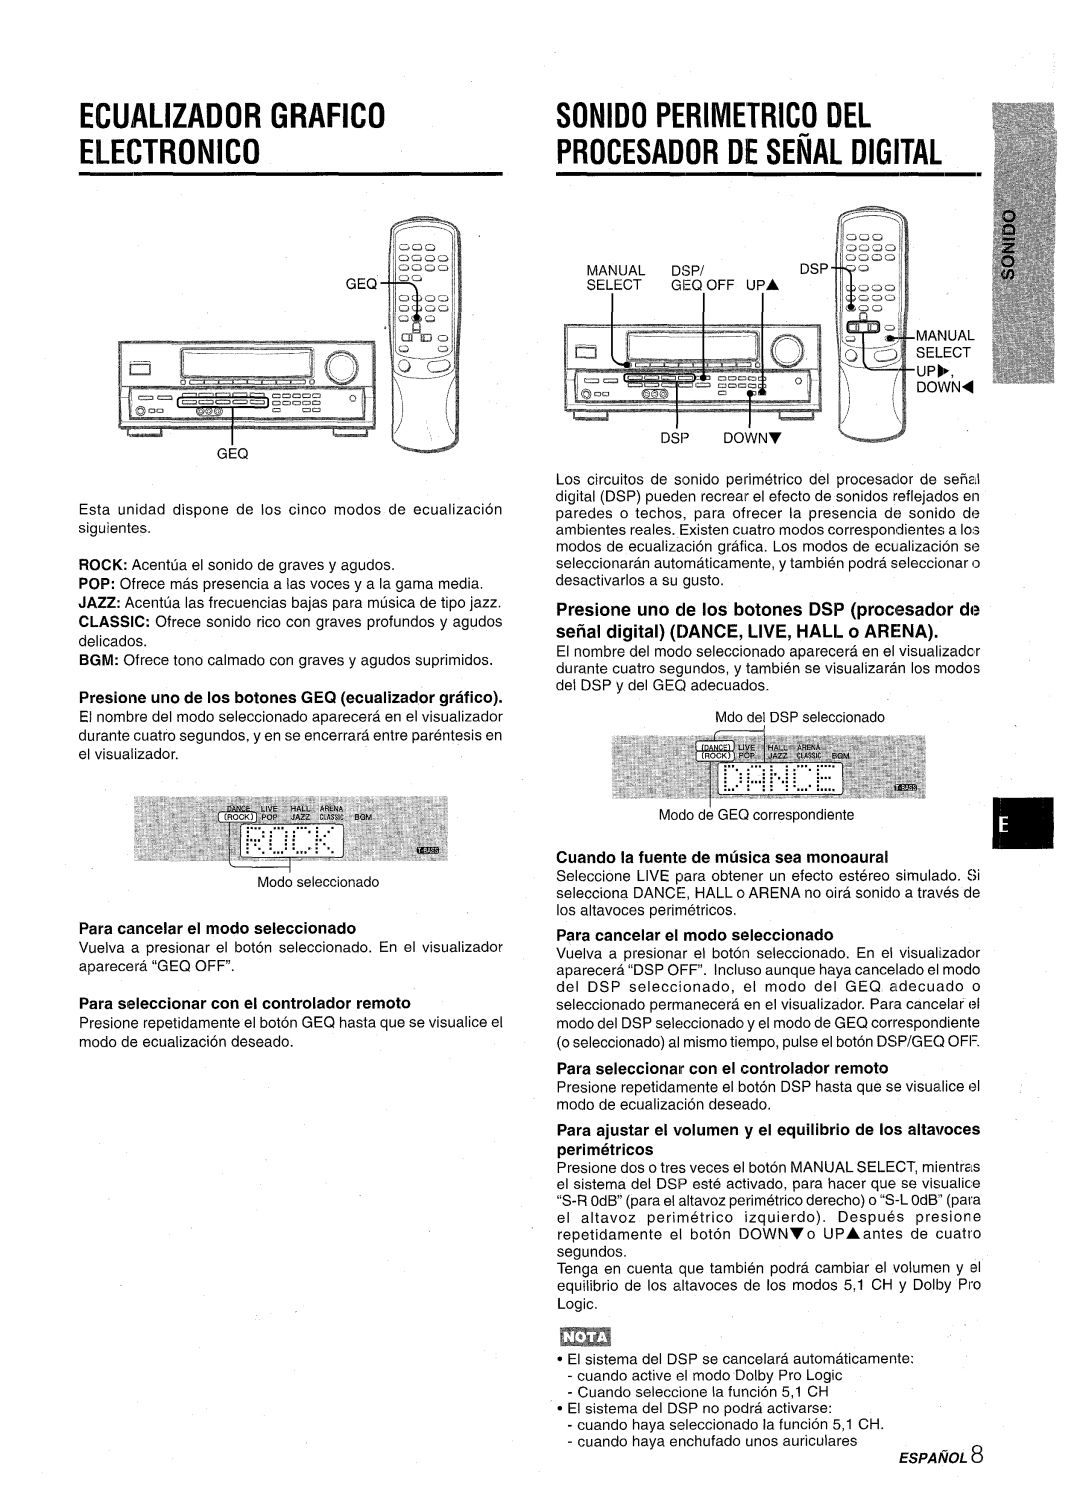 Aiwa AV-D30 manual Ecualizador Grafico Electronic, Sonido Perimetrico Del Procesador Desenal Digital, ESPAfiOL 